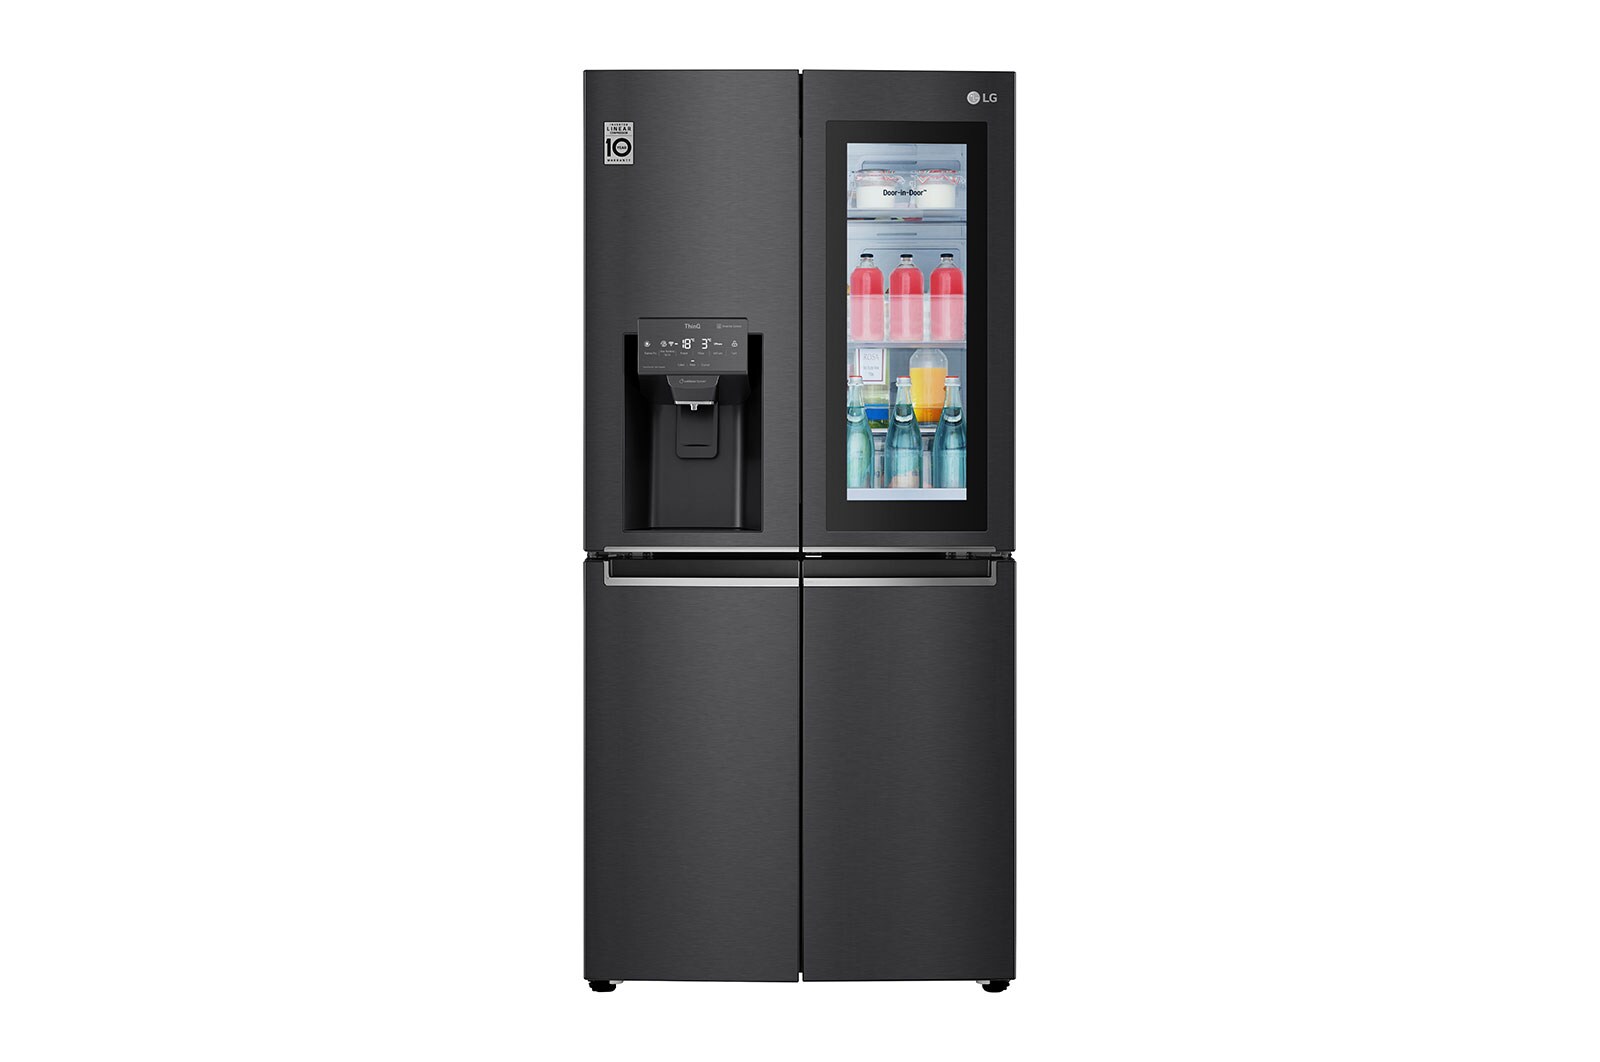 LG  ตู้เย็น Multi Door รุ่น GC-X22FTQLL ขนาด 17.4 คิว ระบบ Inverter Linear Compressor พร้อม Smart WI-FI control ควบคุมสั่งงานผ่านสมาร์ทโฟน, GC-X22FTQLL